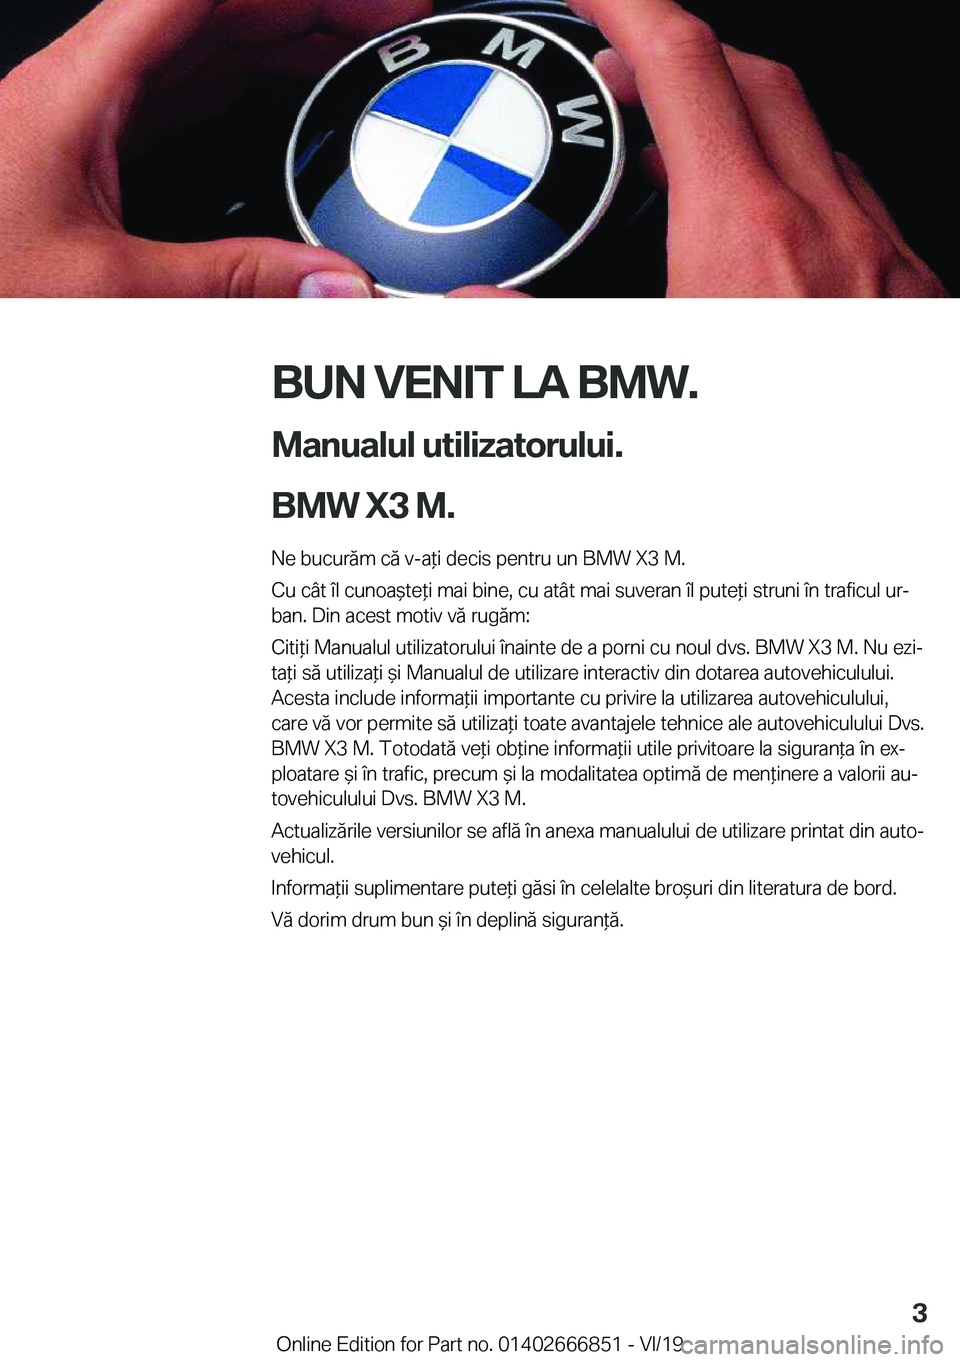 BMW X3 M 2020  Ghiduri De Utilizare (in Romanian) �B�U�N��V�E�N�I�T��L�A��B�M�W�.�M�a�n�u�a�l�u�l��u�t�i�l�i�z�a�t�o�r�u�l�u�i�.
�B�M�W��X�3��M�. �N�e��b�u�c�u�r�